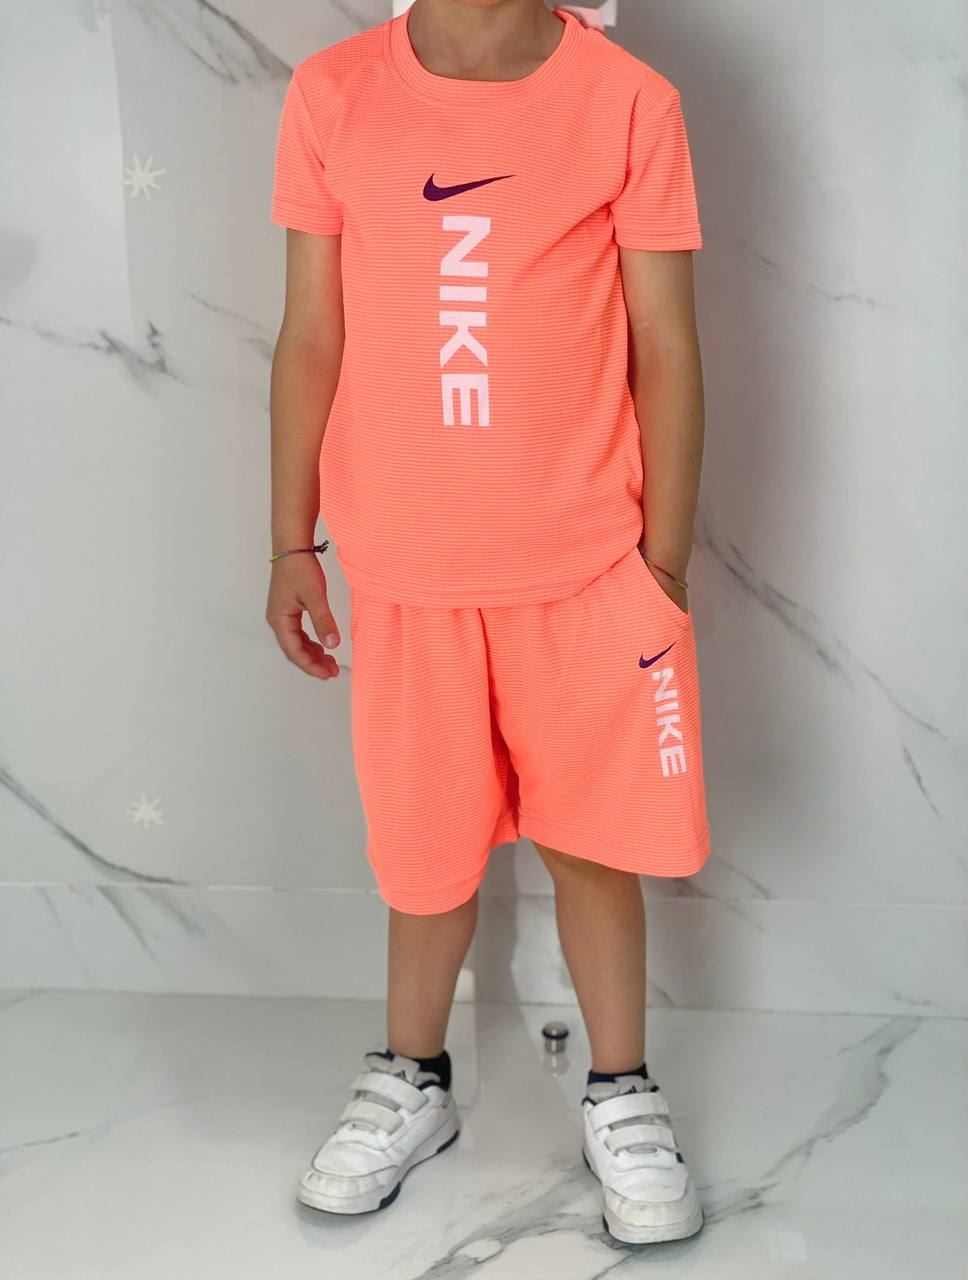 Conjunto de niño Nike - Imagen 3